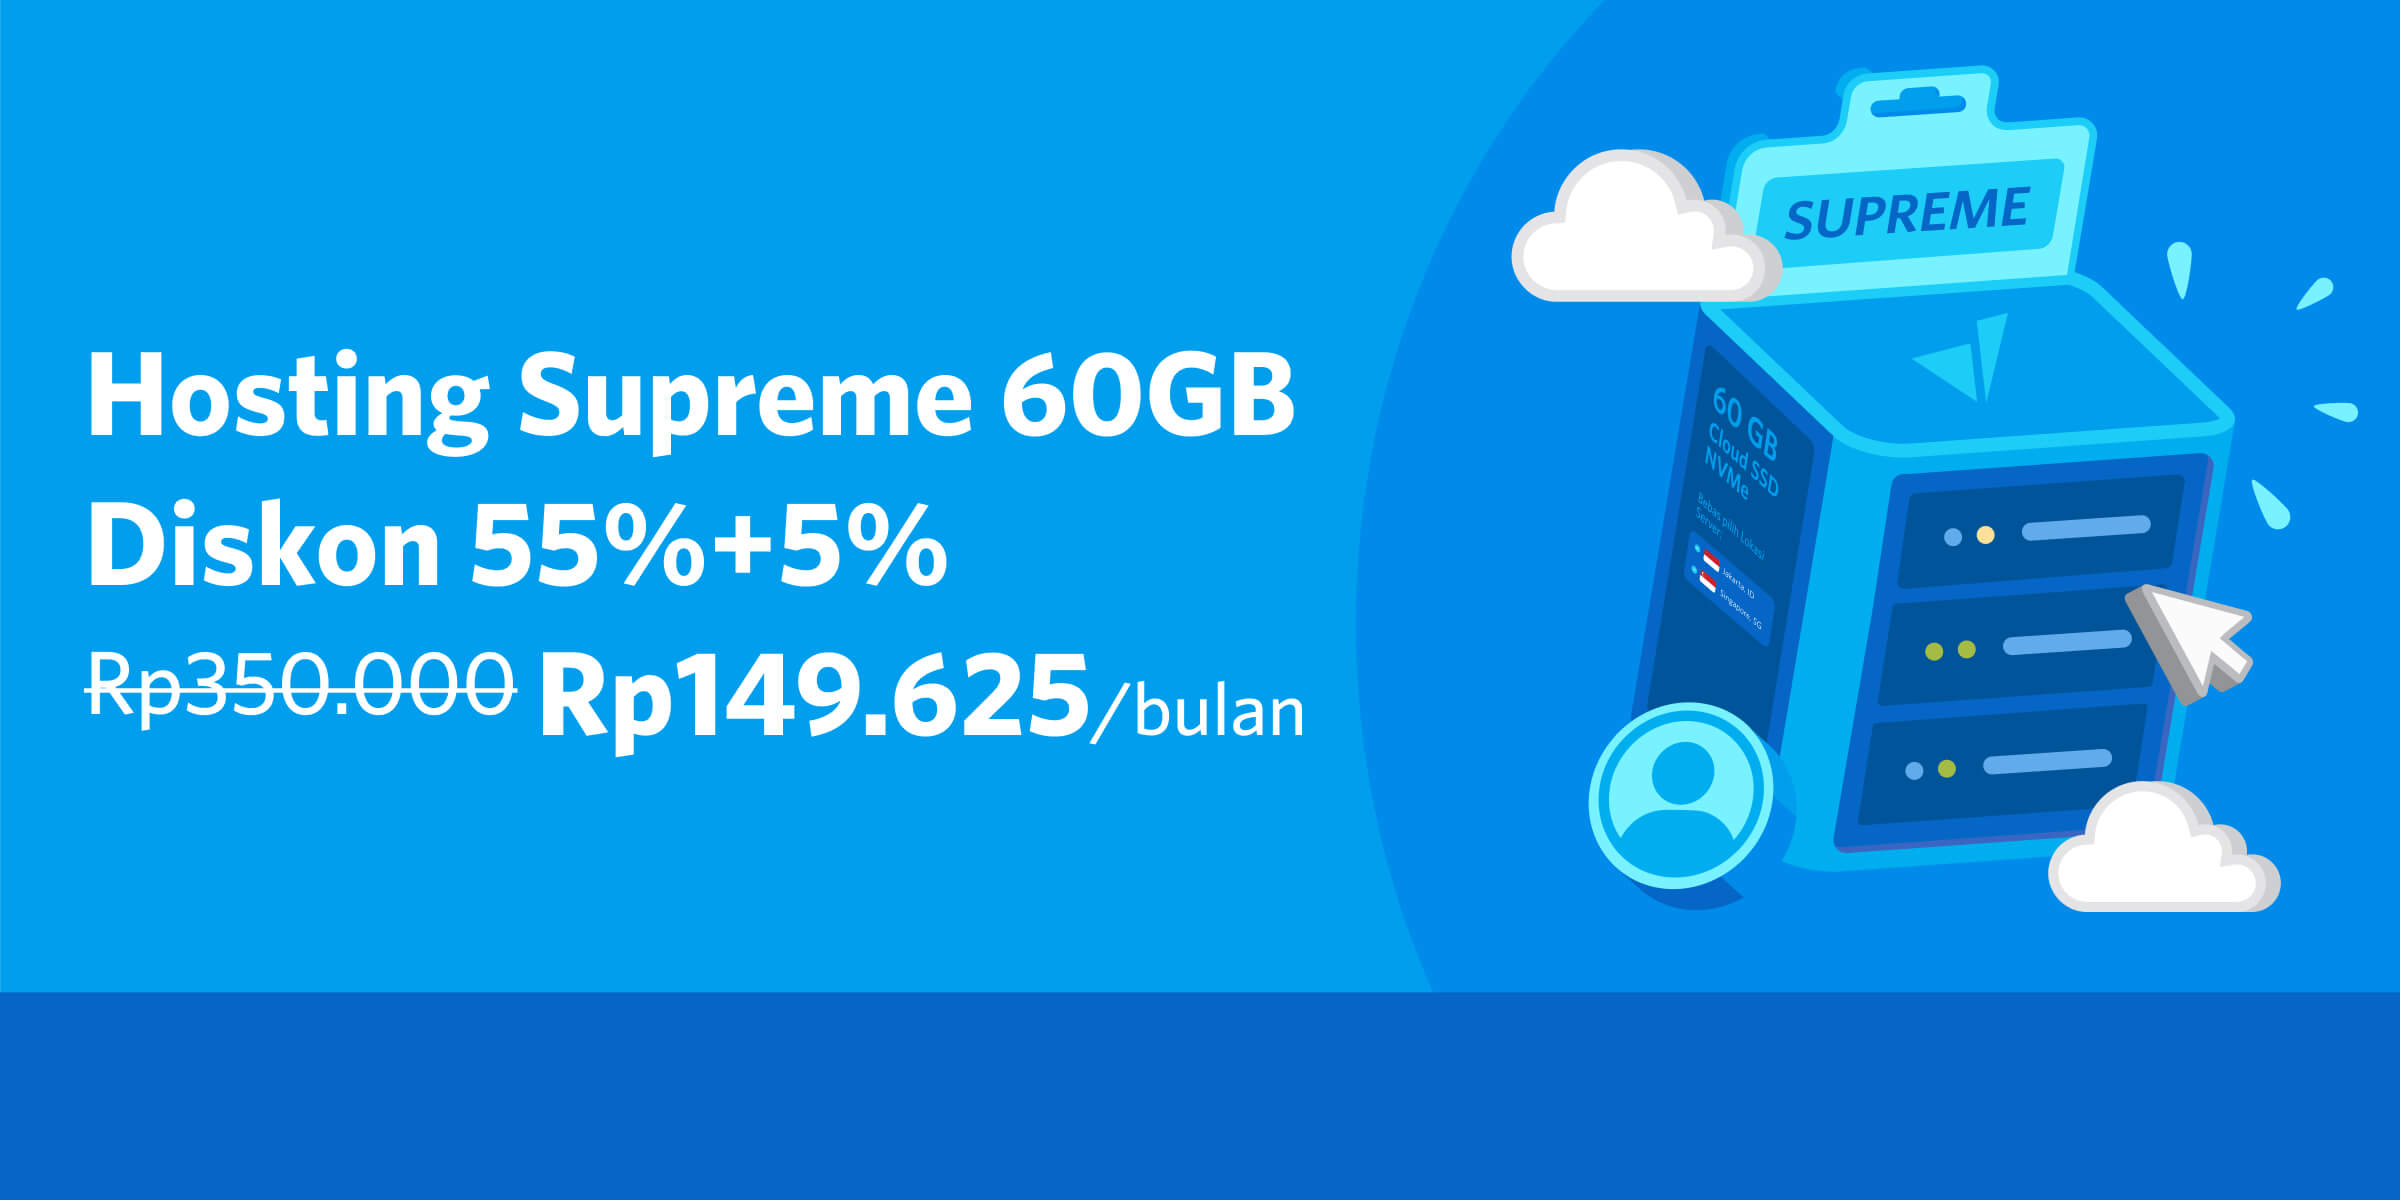 Diskon 55%+5% Web Hosting Supreme 60GB